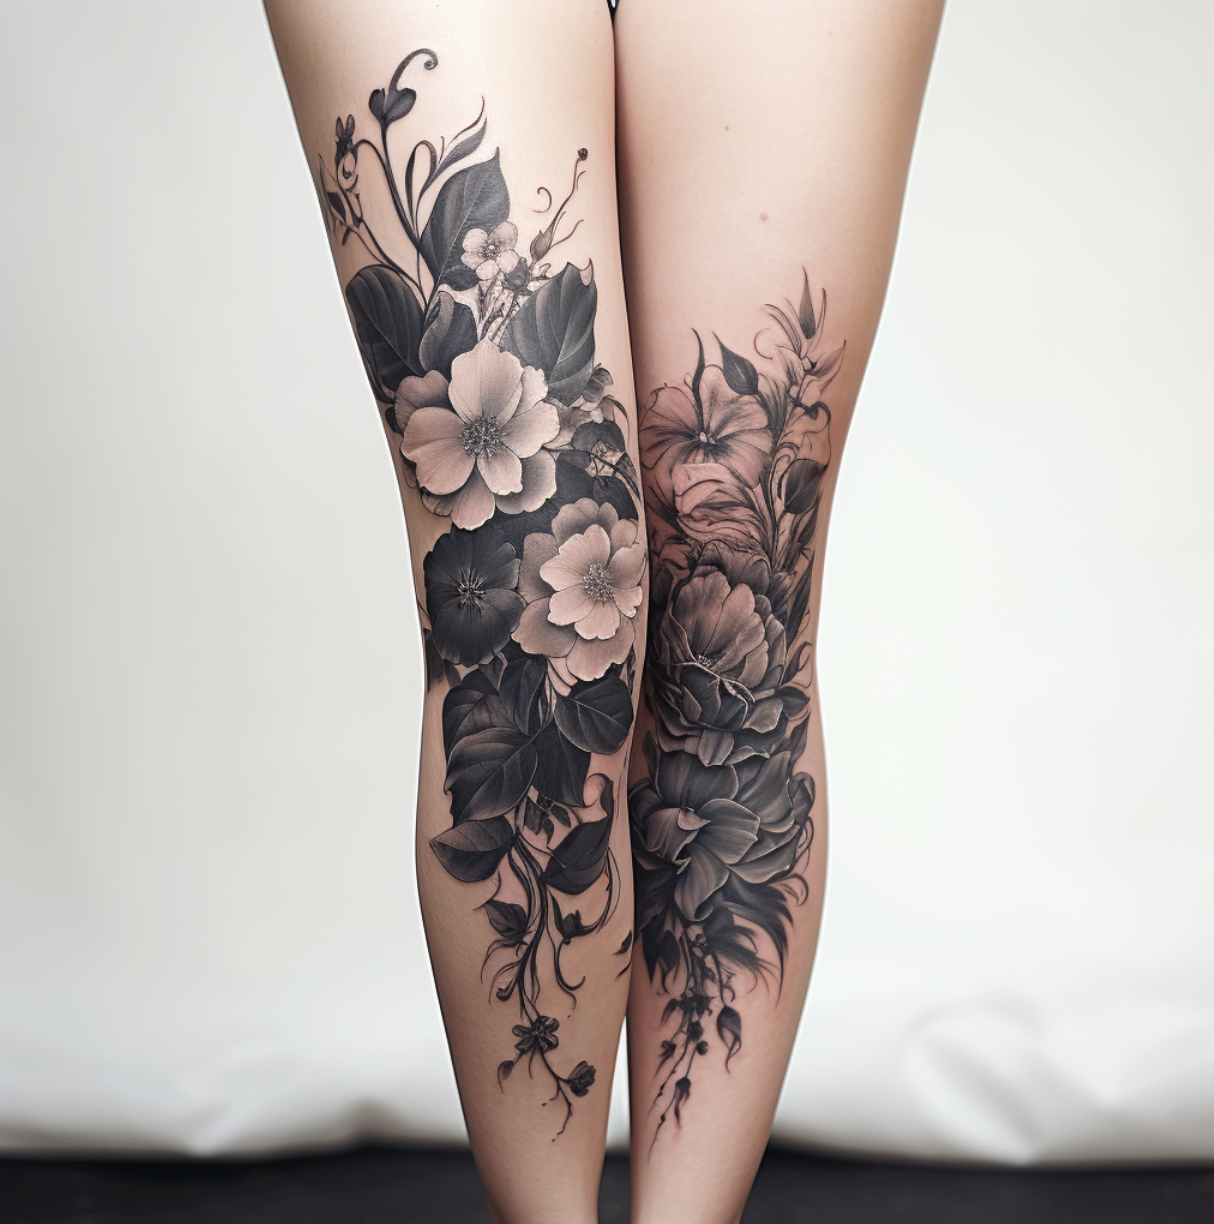 Tattoo,Black ink,Flowers,Legs